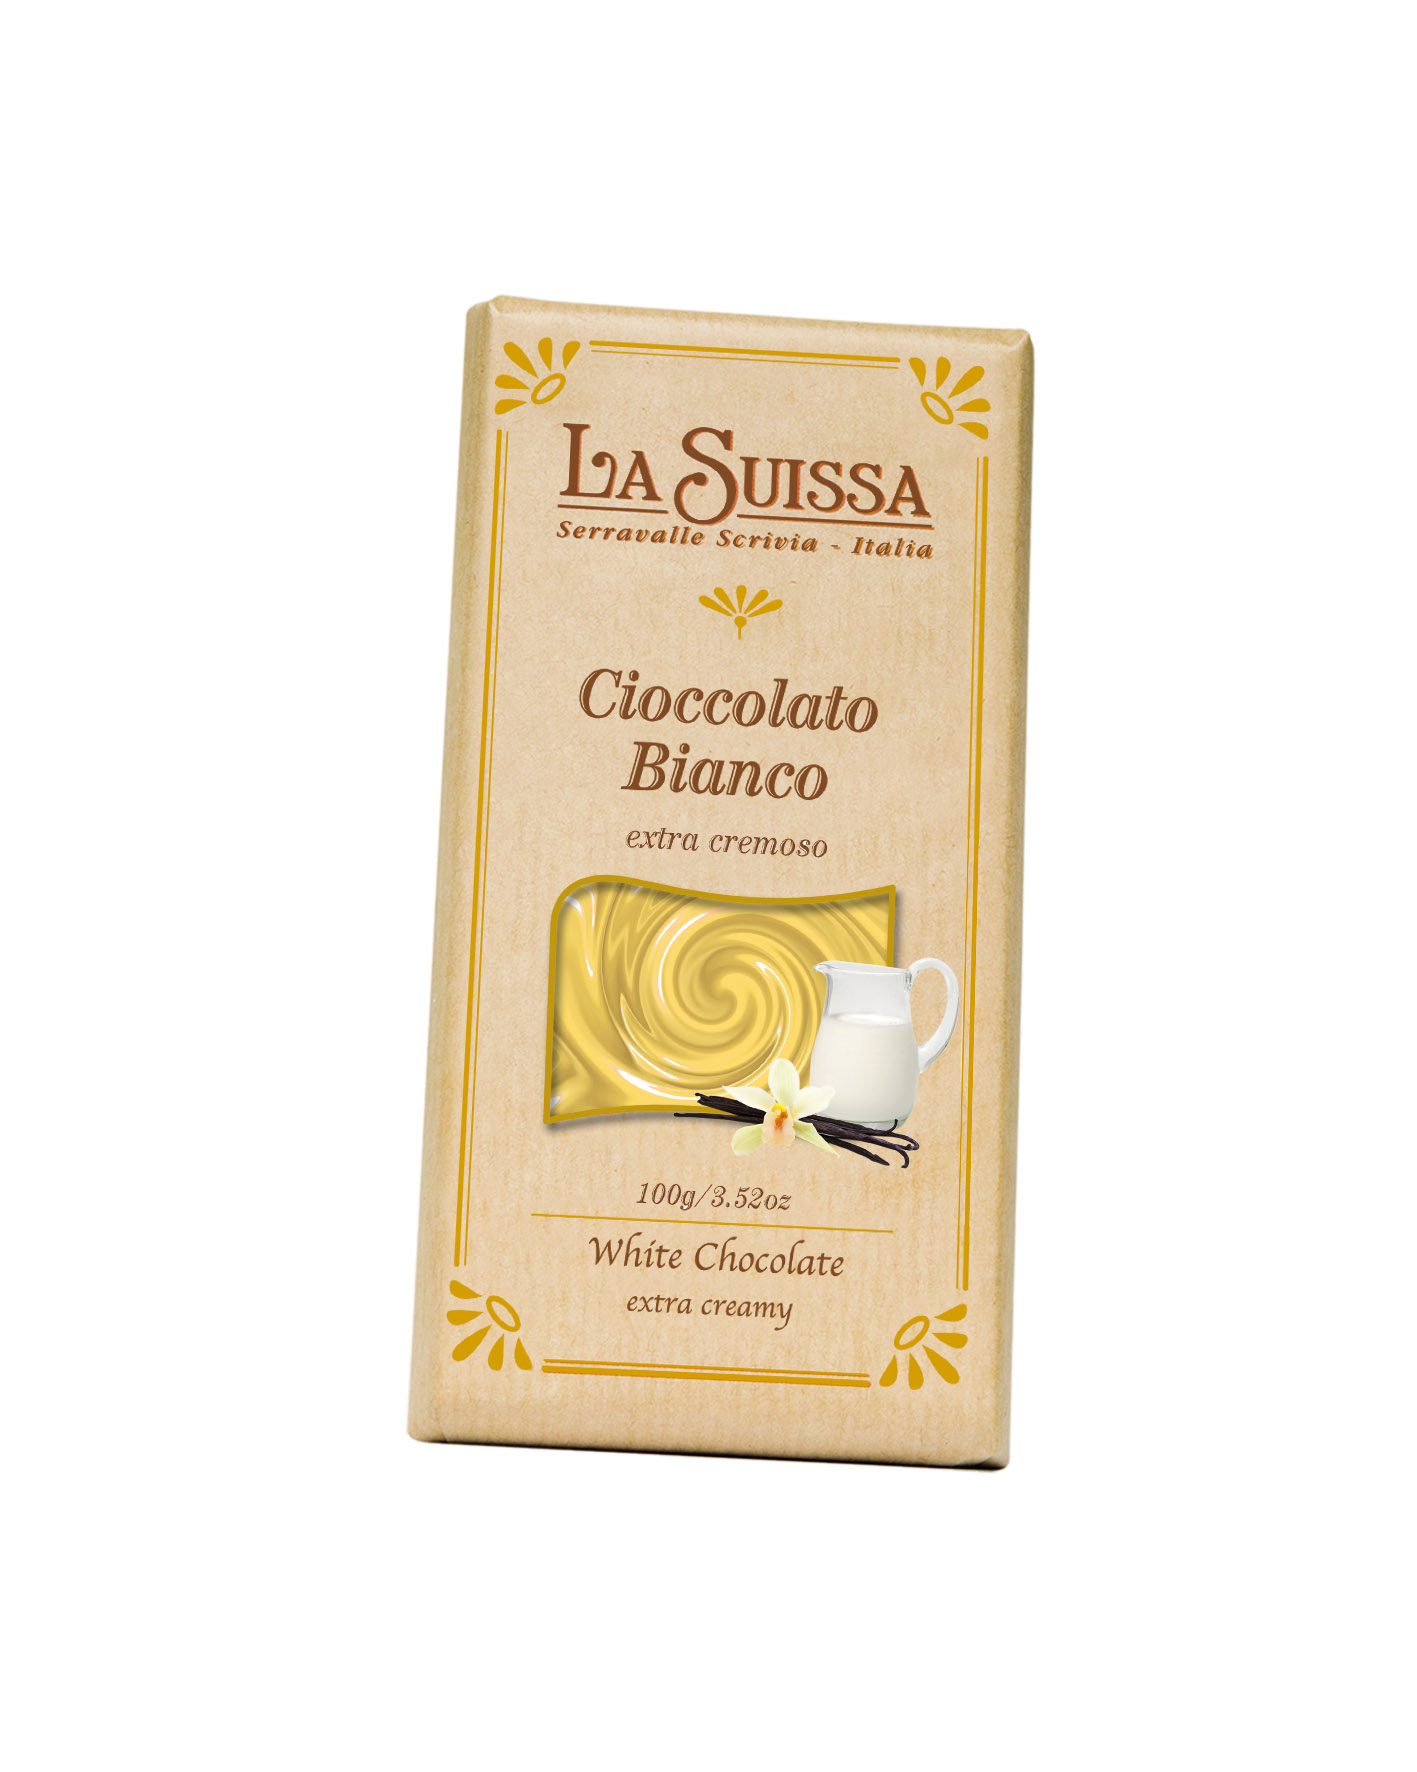 Белый шоколад 100 г. La Suissa белый шоколад. Итальянский белый шоколад. Шоколад белый Италия. Шоколад Suissa итальянский.